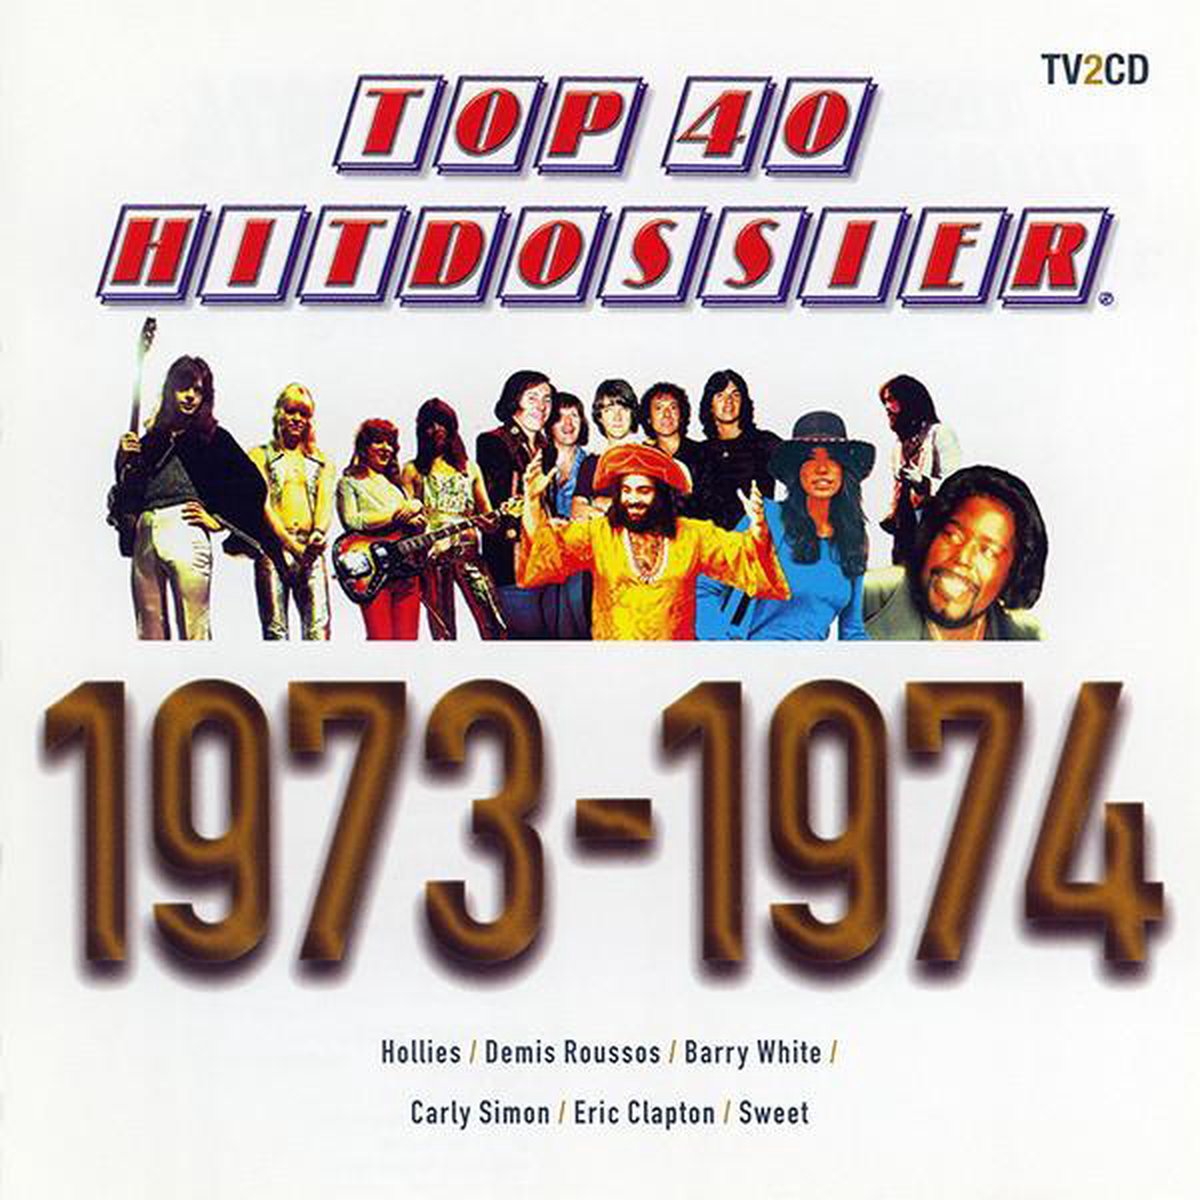 Top 40 Hitdossier '73-'74 - various artists